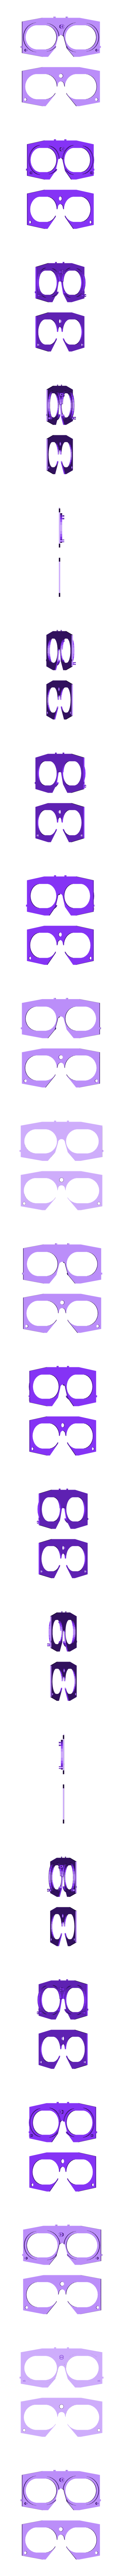 lens_support.stl Download free STL file Virtual Reality Glasses • 3D printable design, Kuutio3D